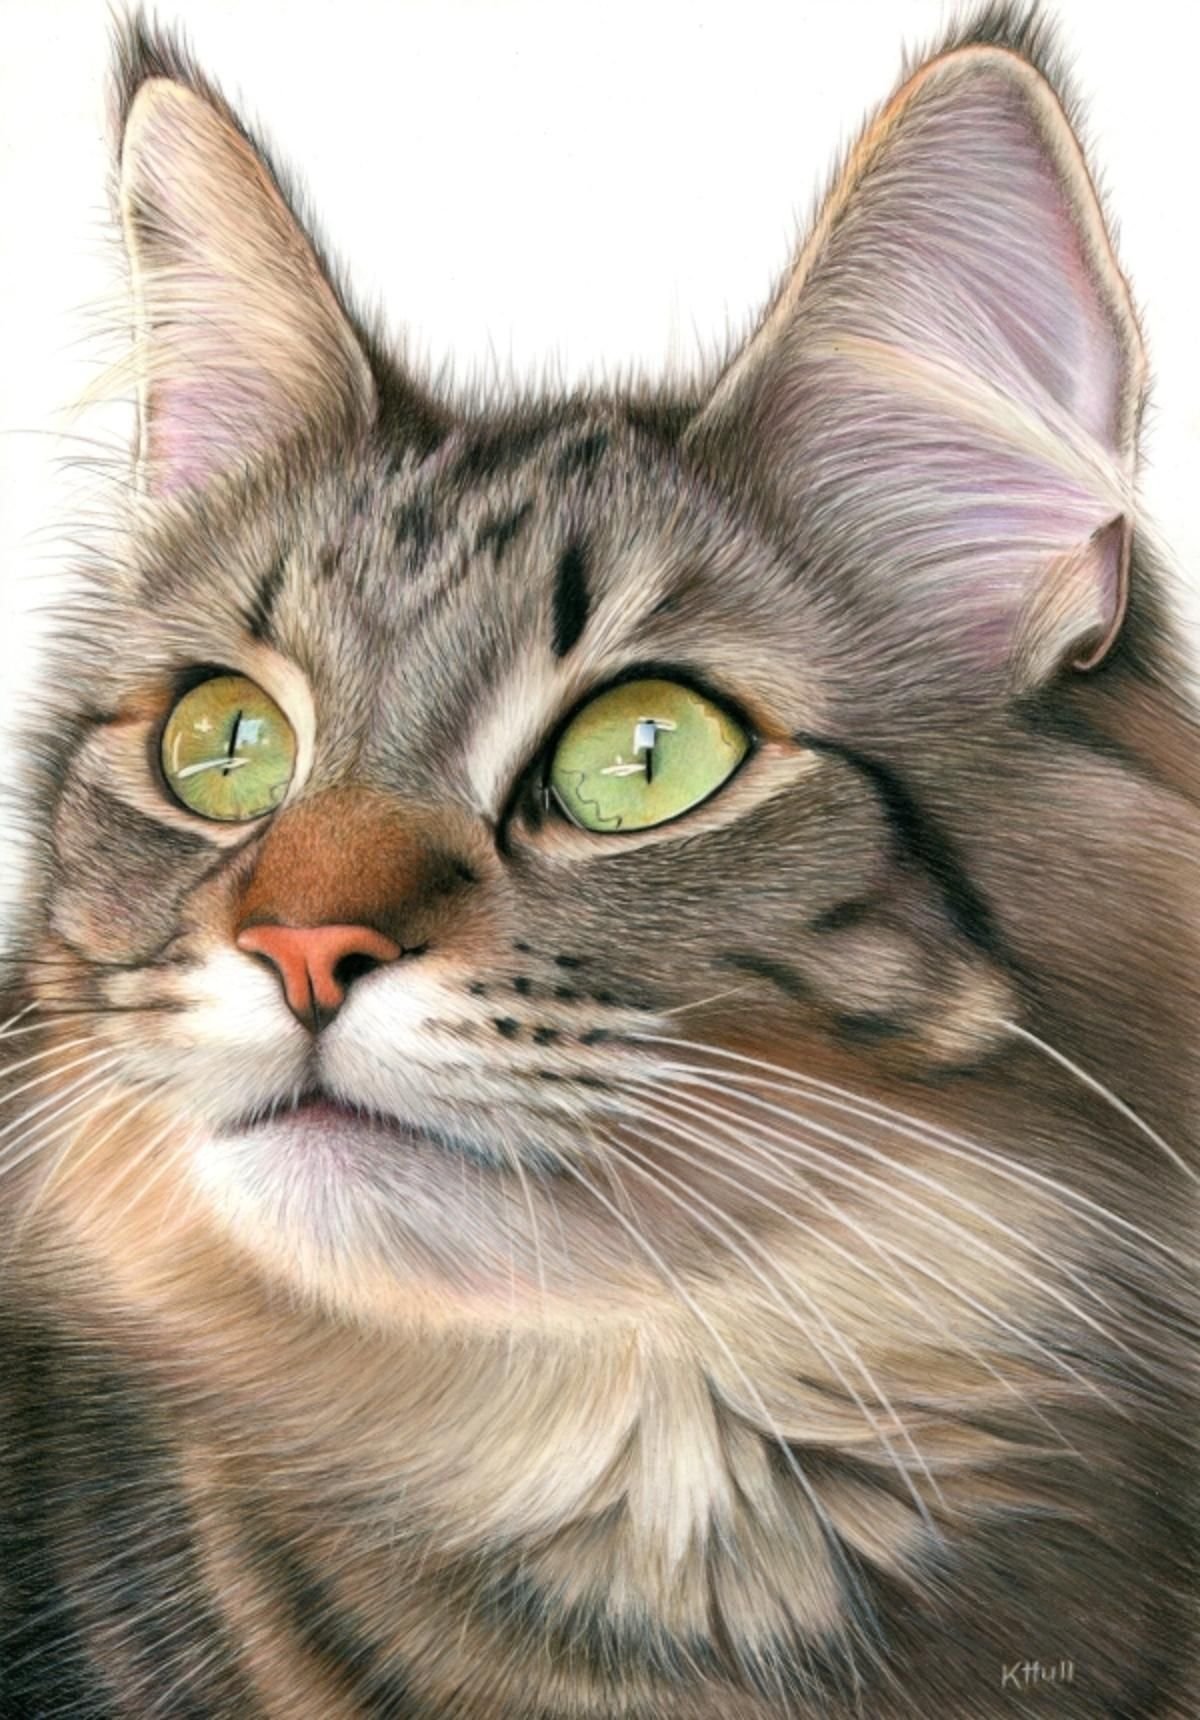 Цветная картинка котика. Кошачья морда. Портрет кота. Мордочка котенка. Красивая морда кошки.